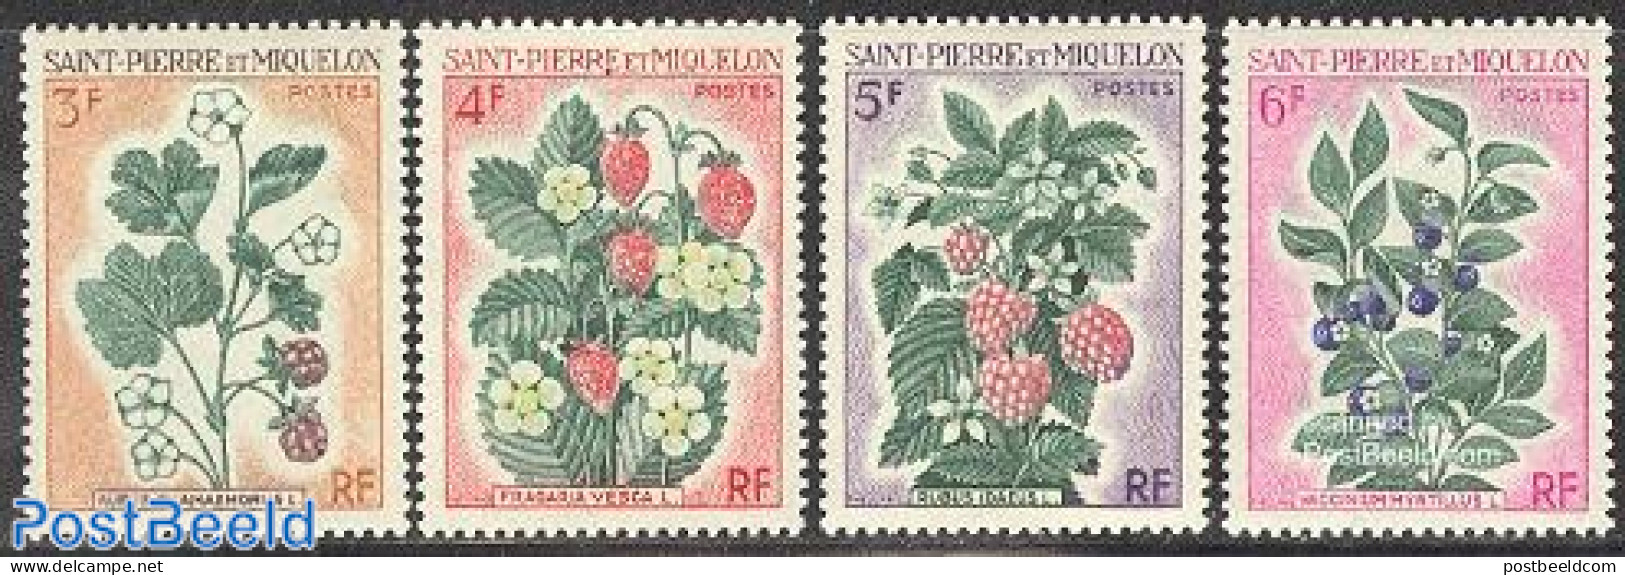 Saint Pierre And Miquelon 1970 Indigenous Fruits 4v, Mint NH, Health - Nature - Food & Drink - Flowers & Plants - Fruit - Food